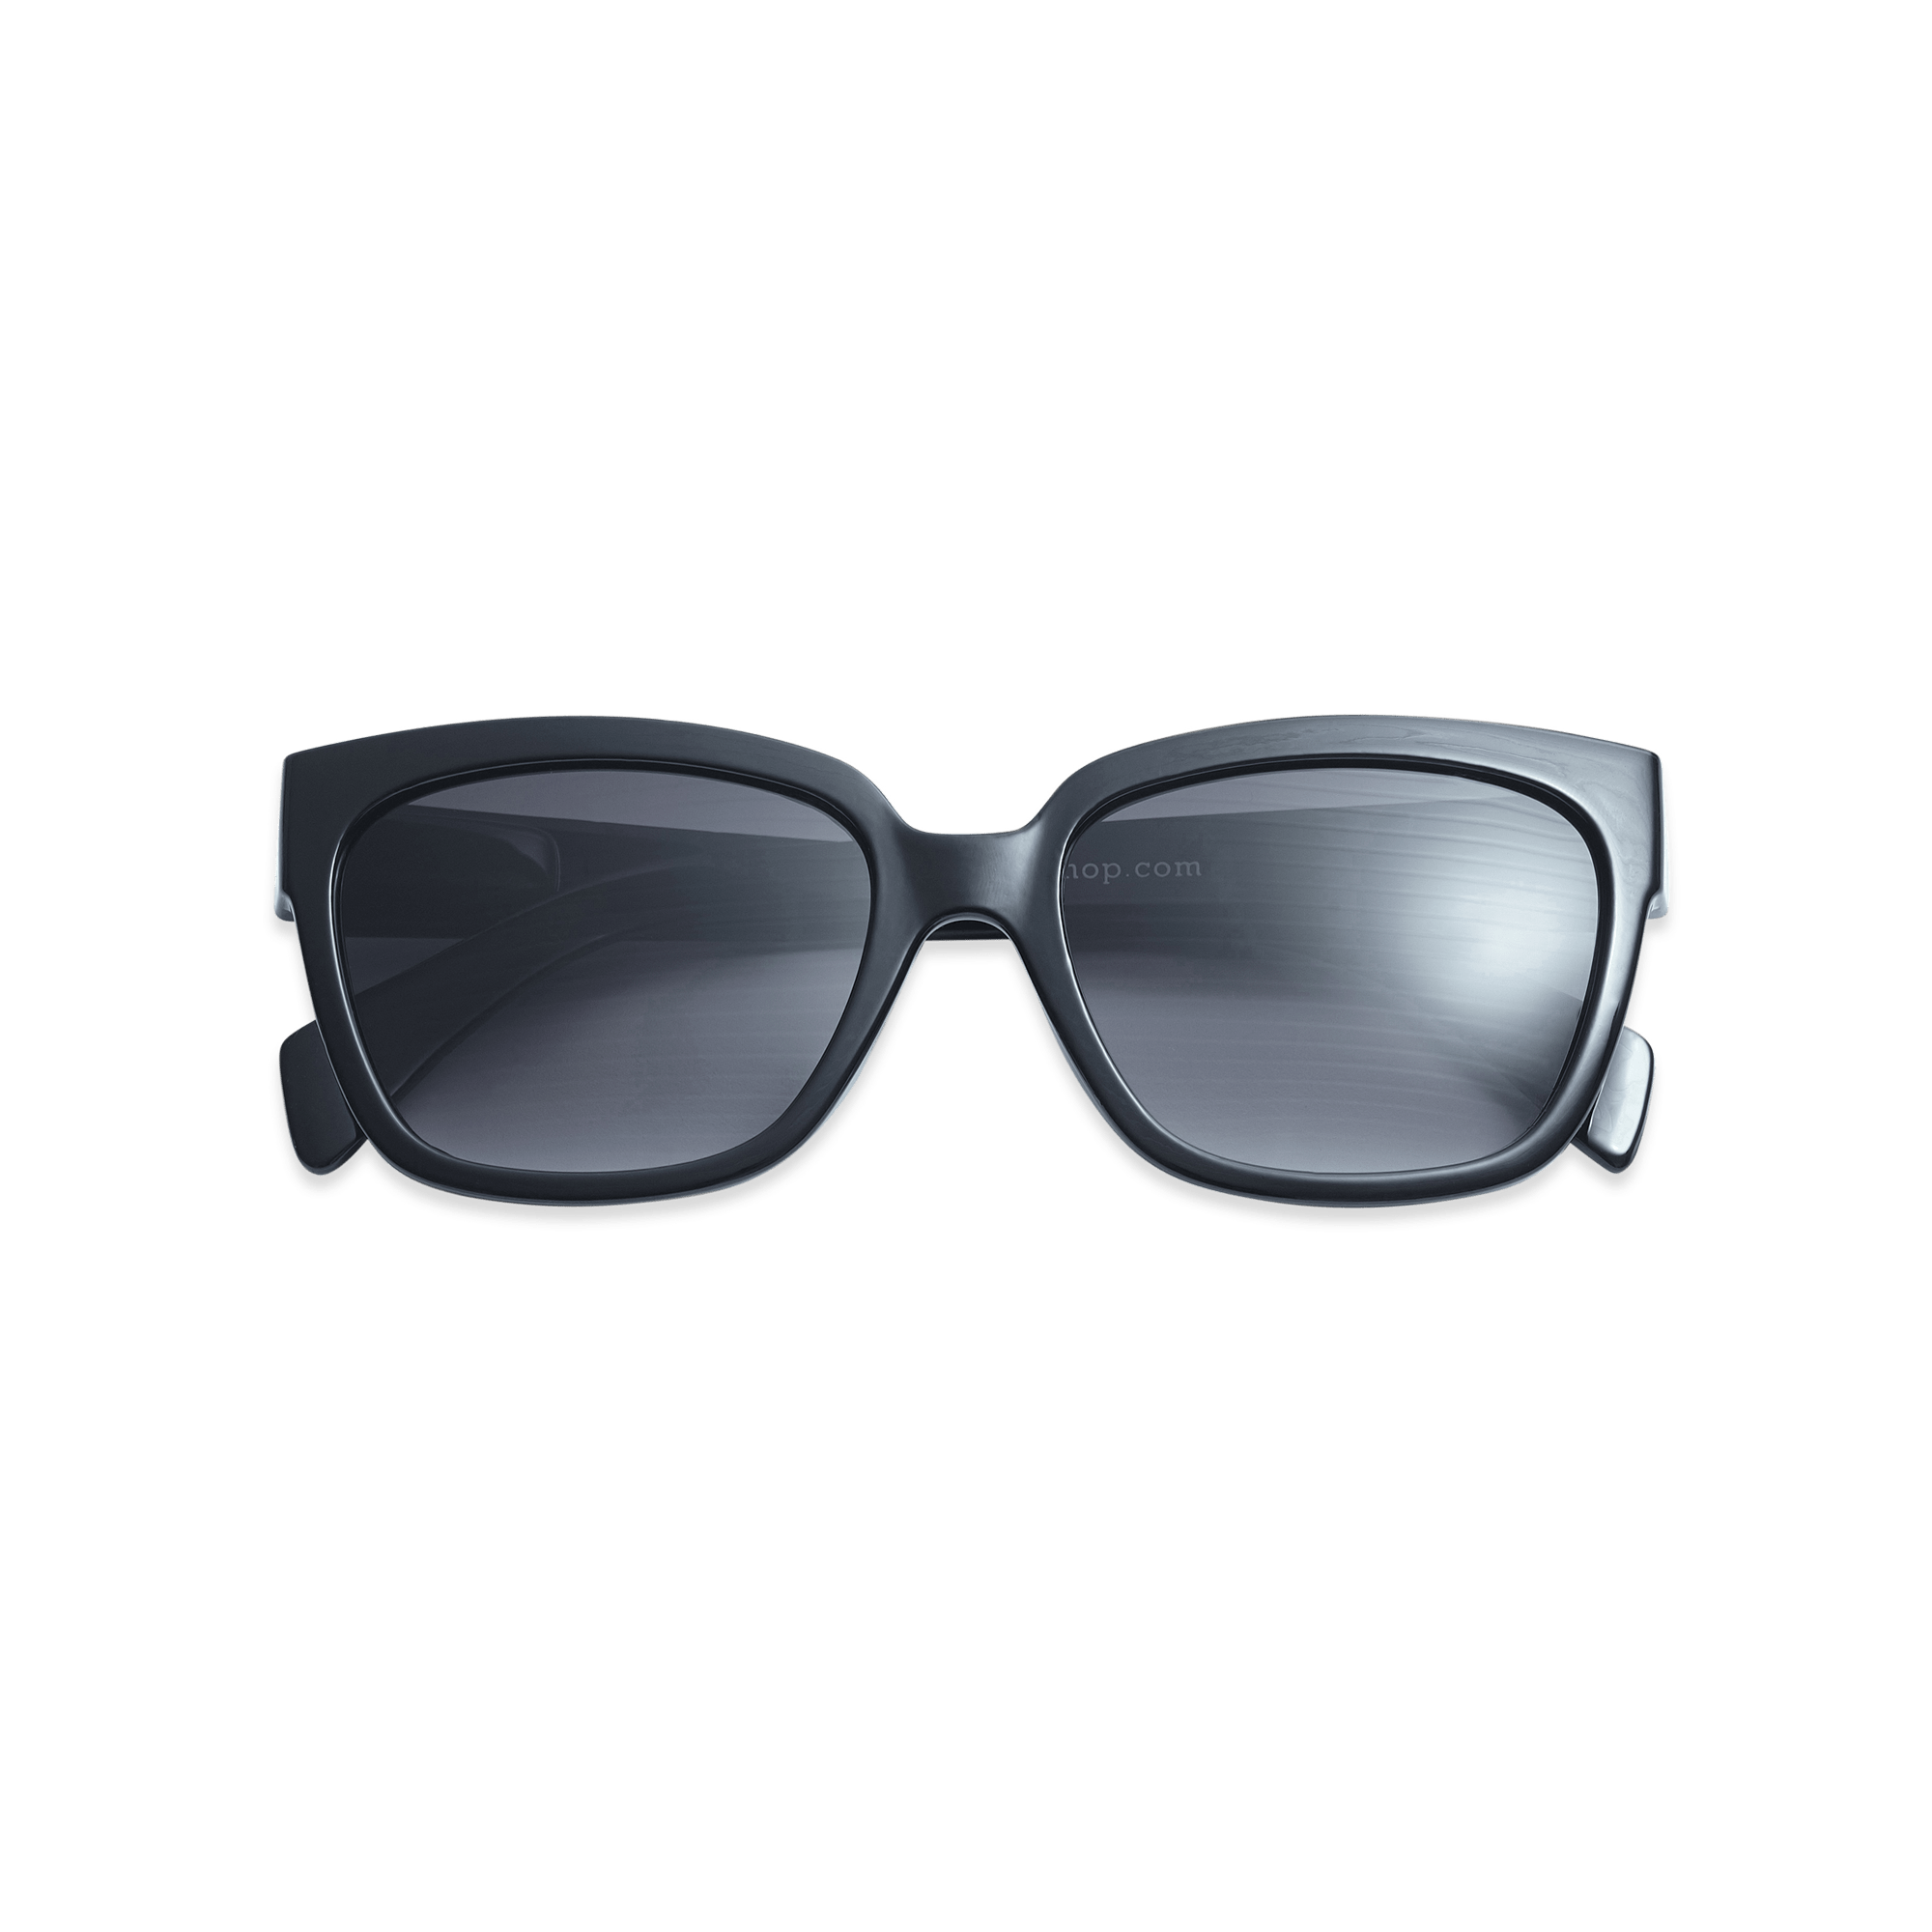 Bifocal sunglasses Mood - black